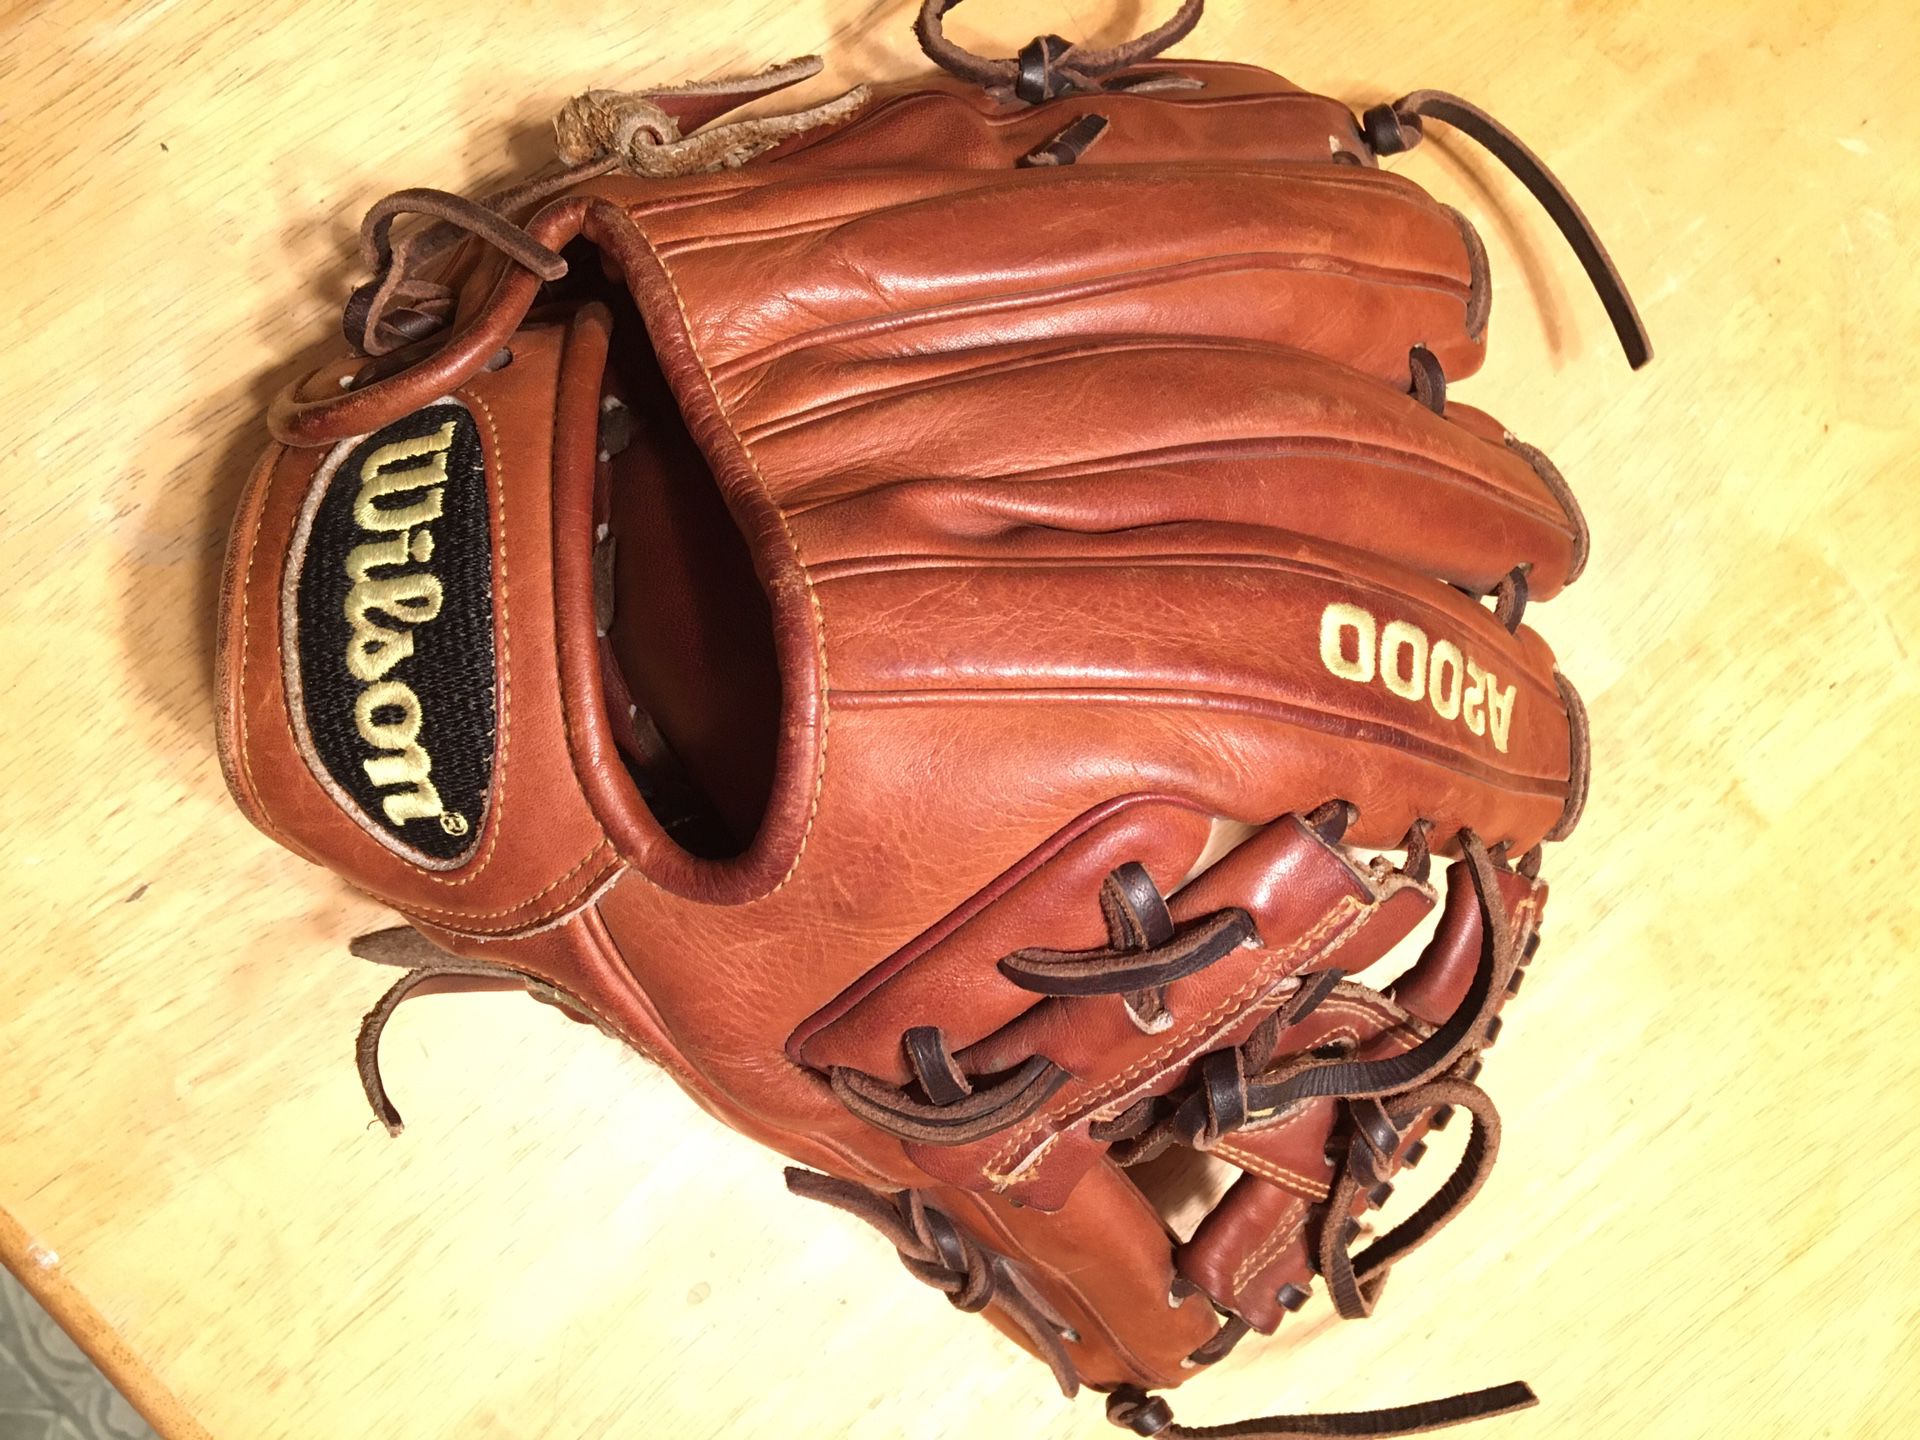 Dustin Pedroia A2000  Baseball Glove - Size 11.5 